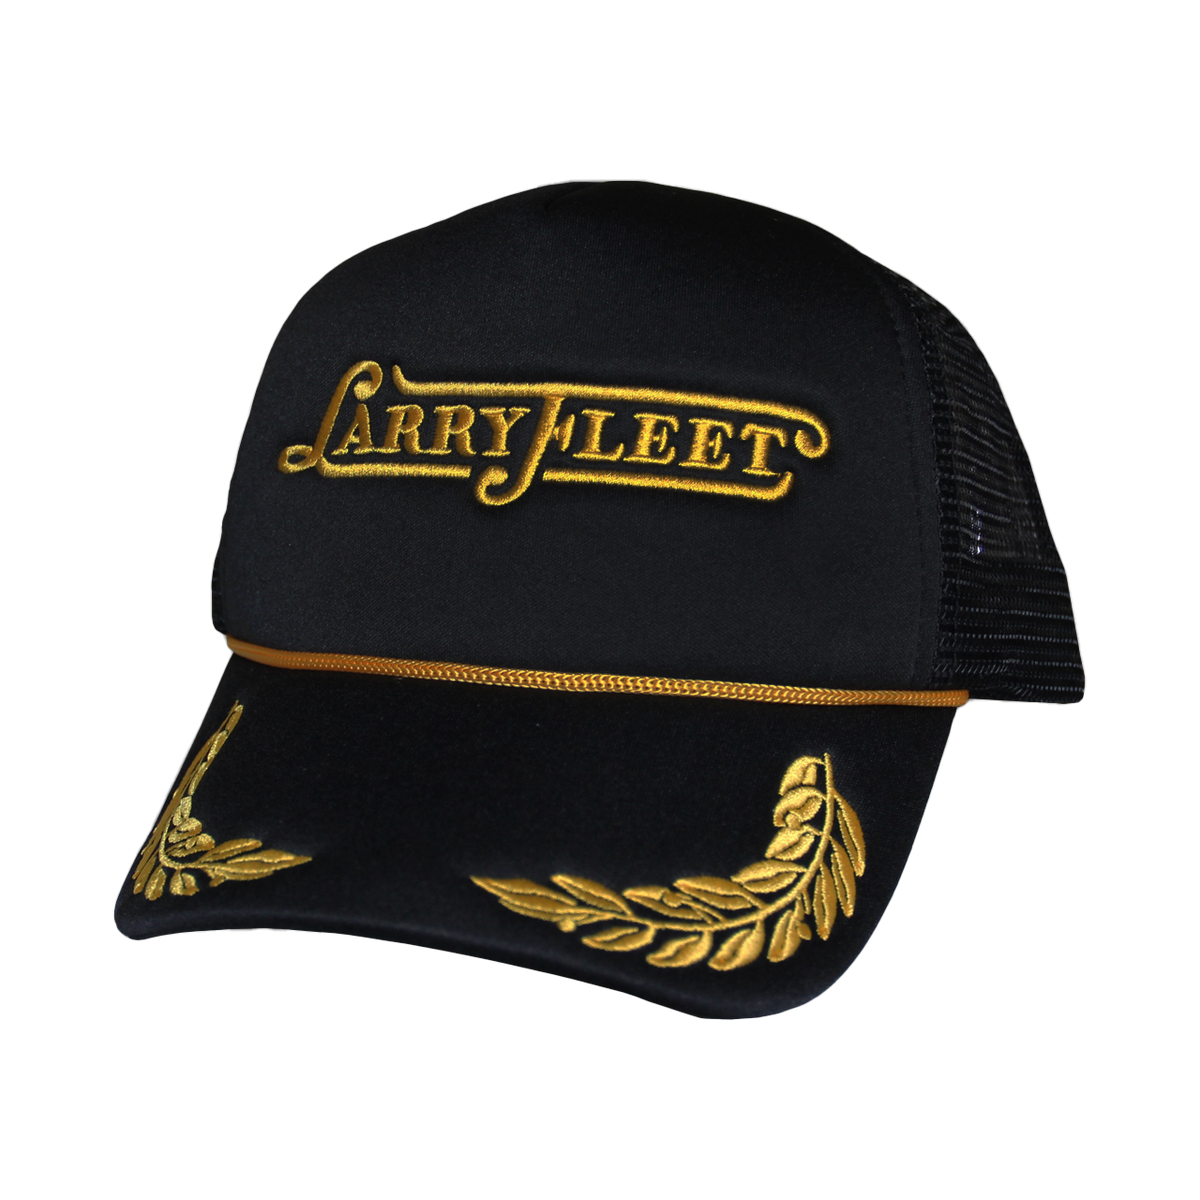 Larry Fleet Black & Gold Trucker Hat – Larry Fleet Official Merchandise